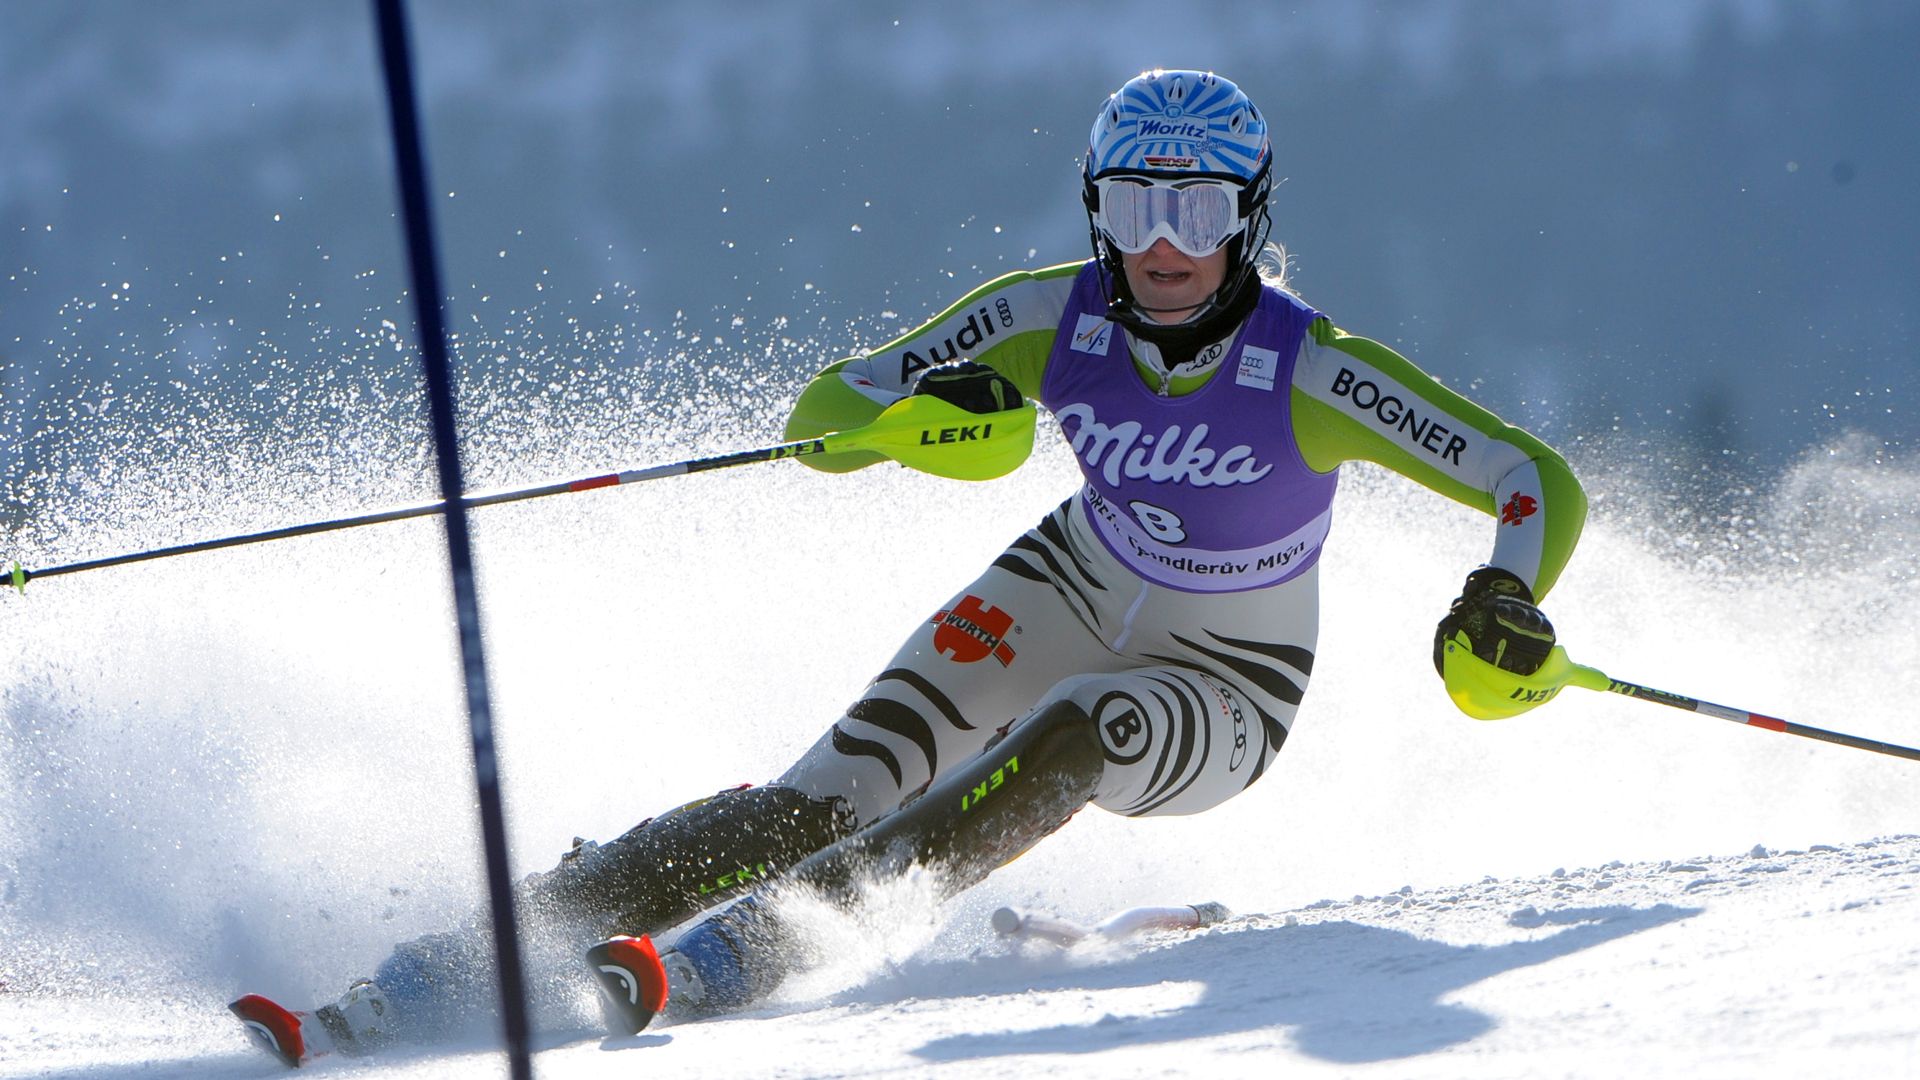 German skier Susanne Riesch has left knee surgery